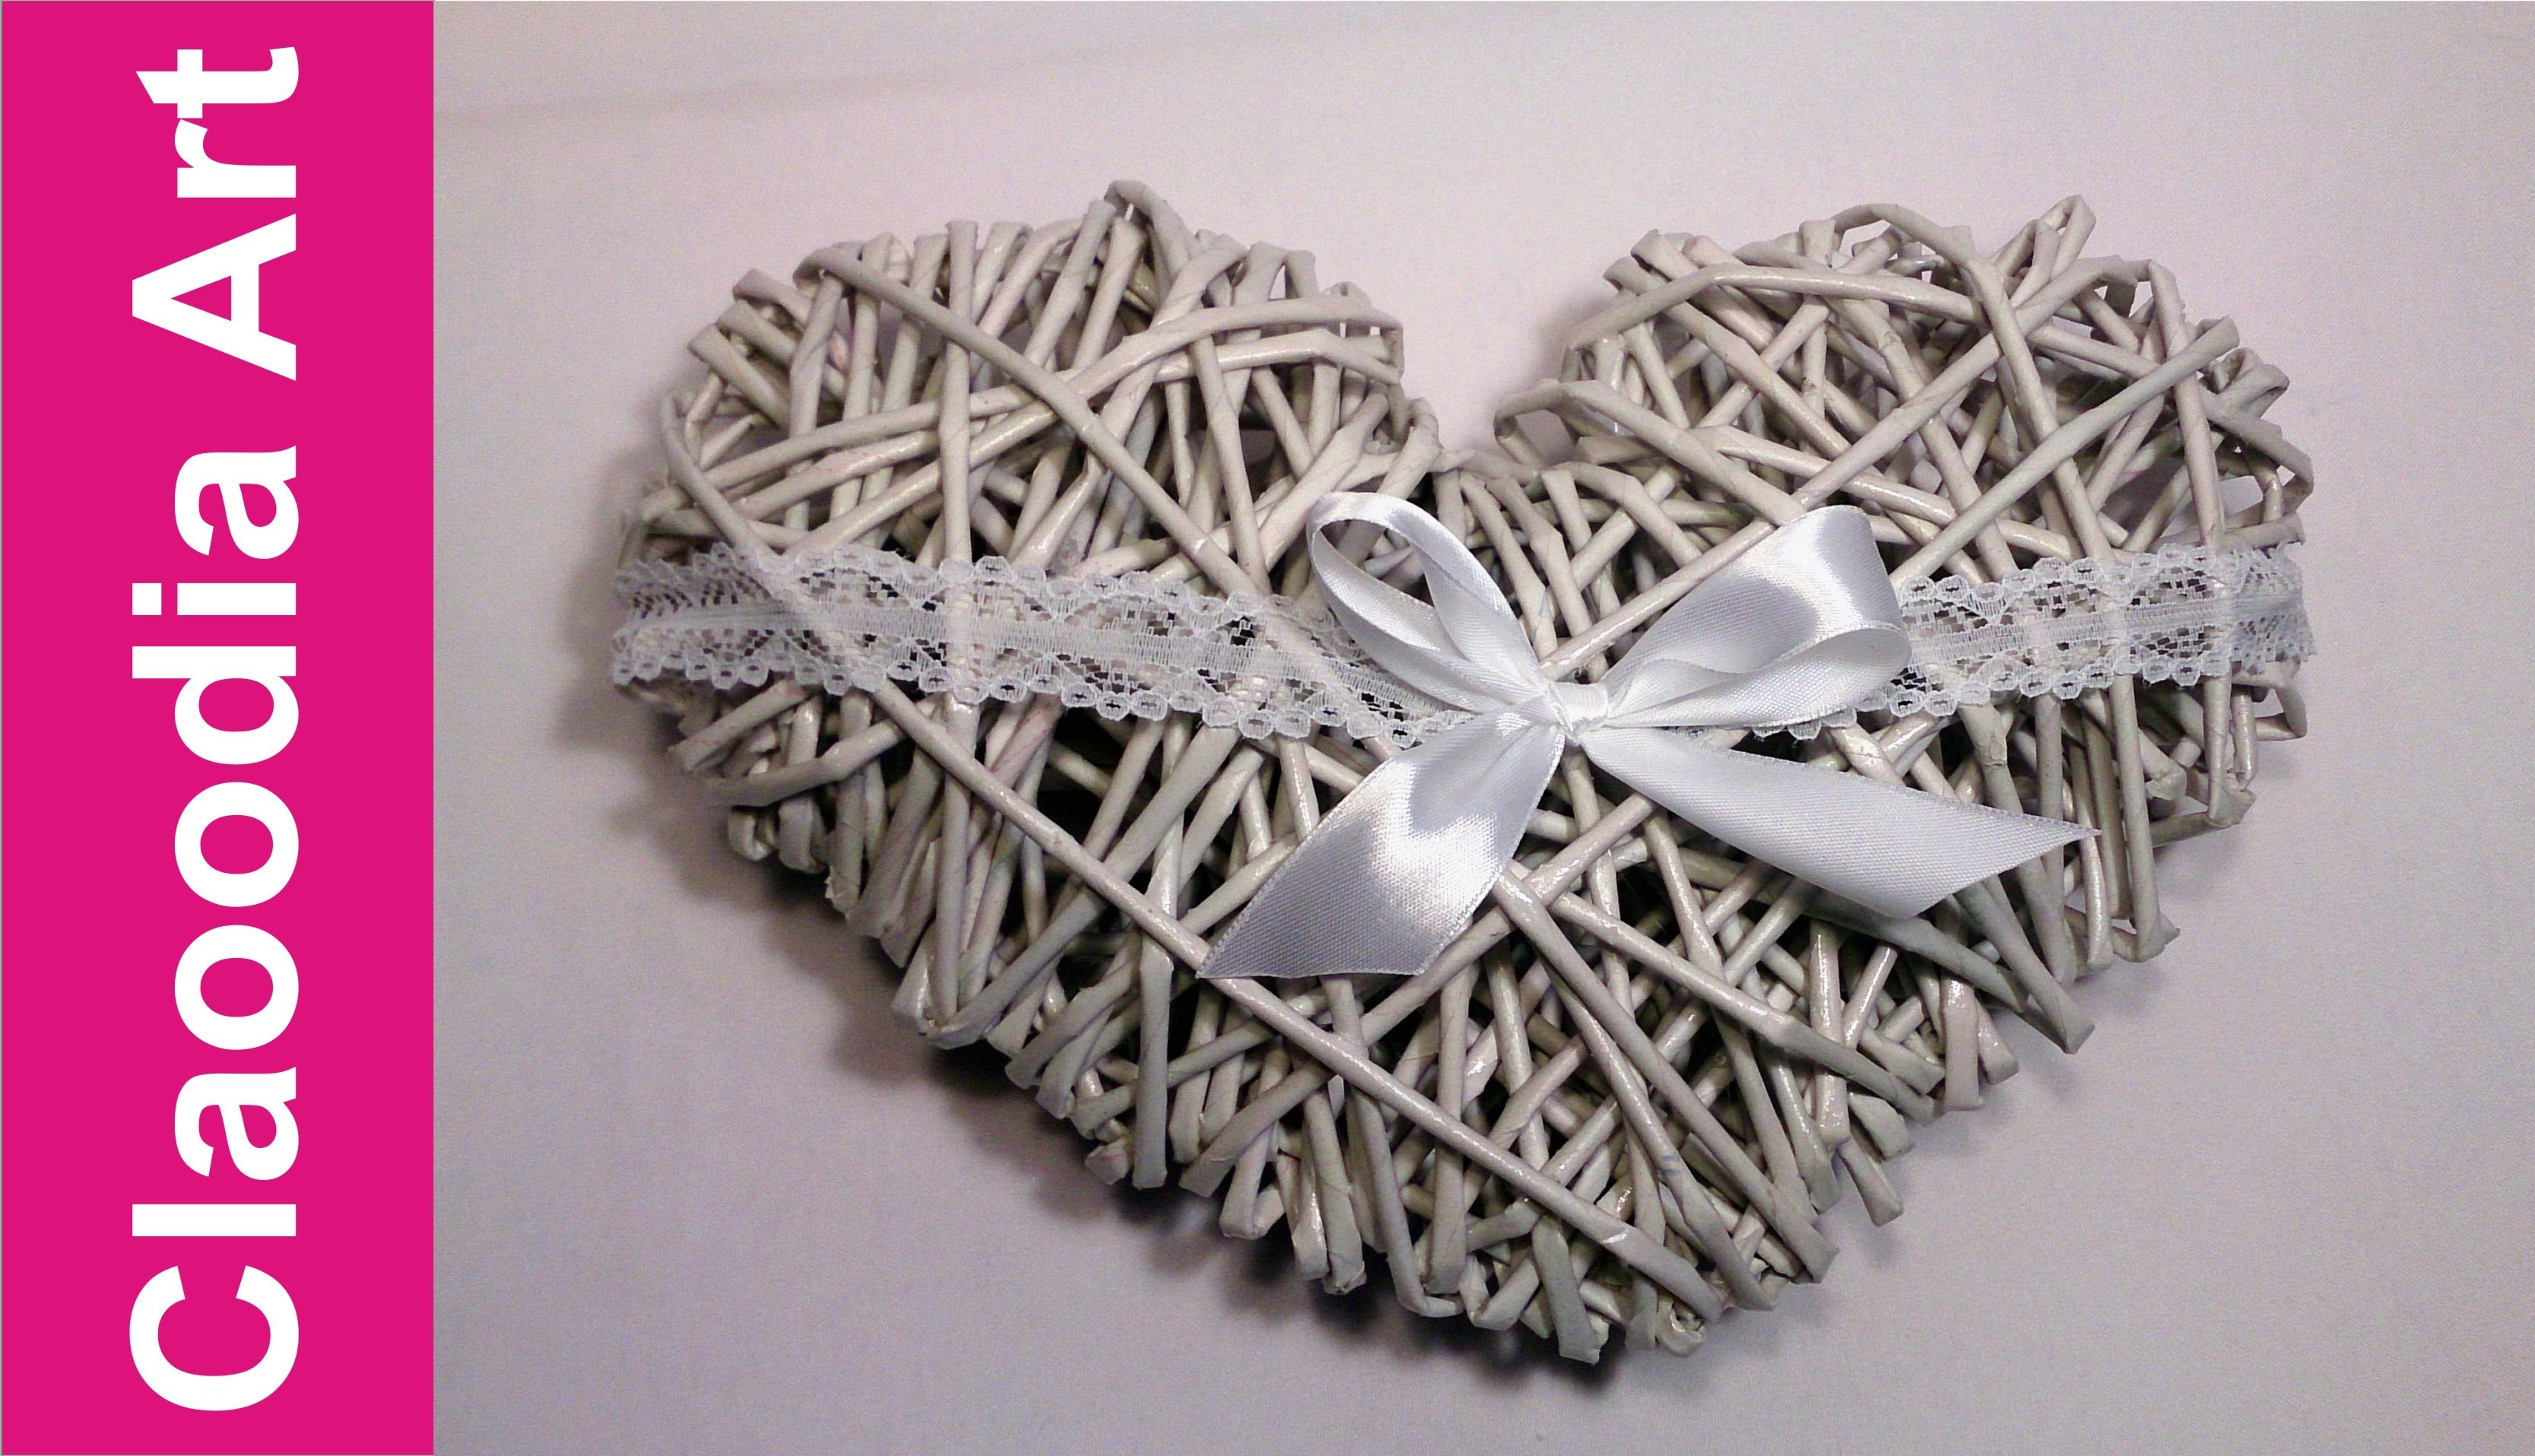 Walentynkowe serce z papierowej wikliny krok po kroku (heart, paper wicker)